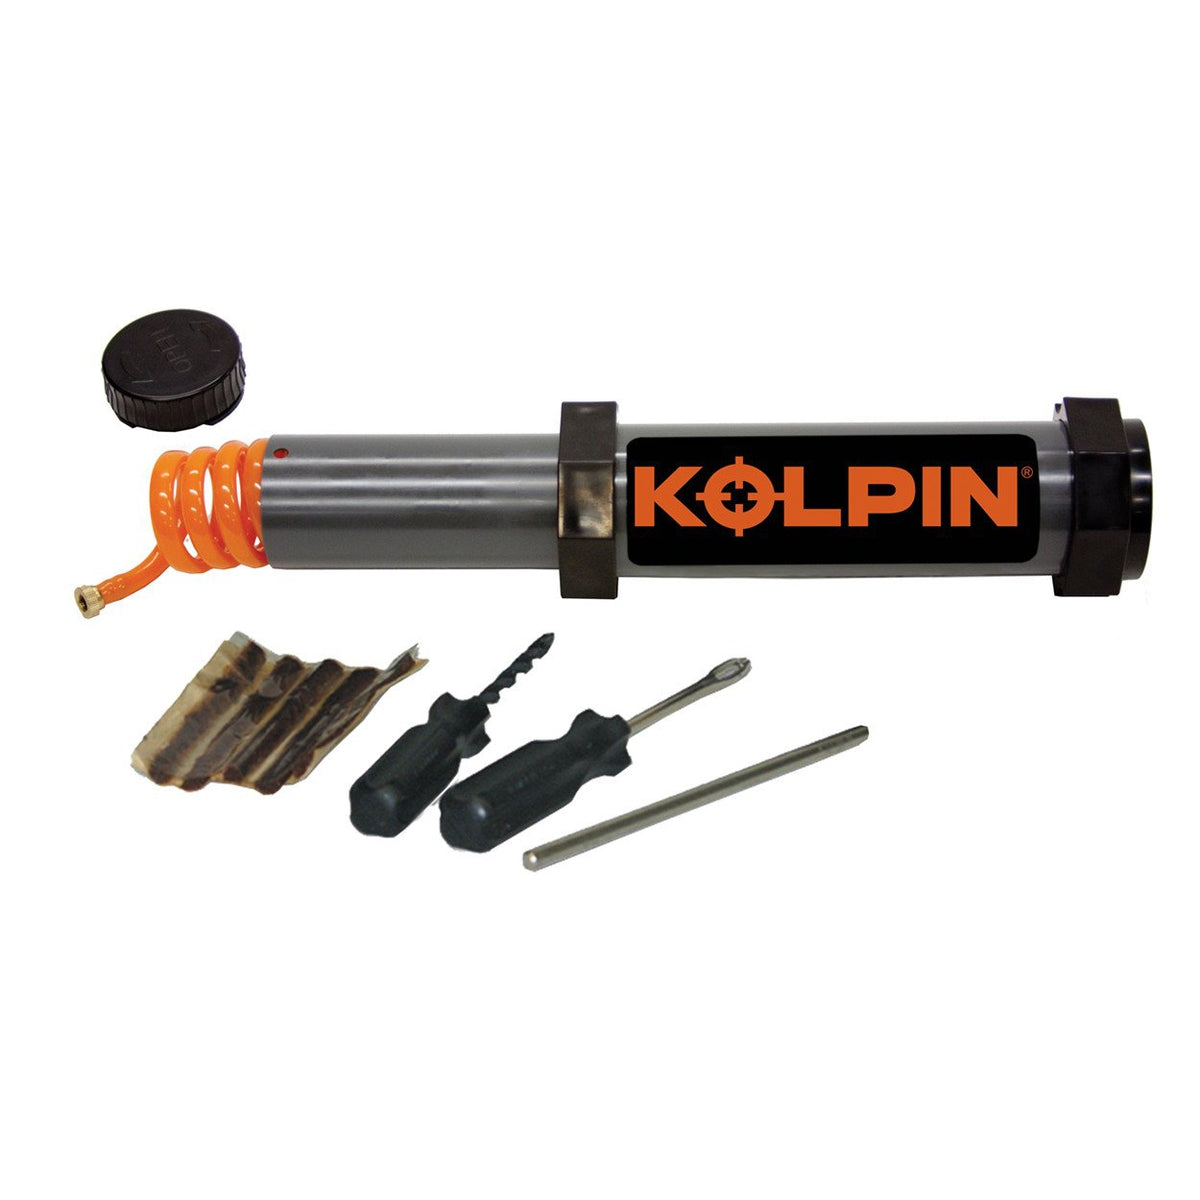 Kolpin Flat Tire Repair Kit With Pump